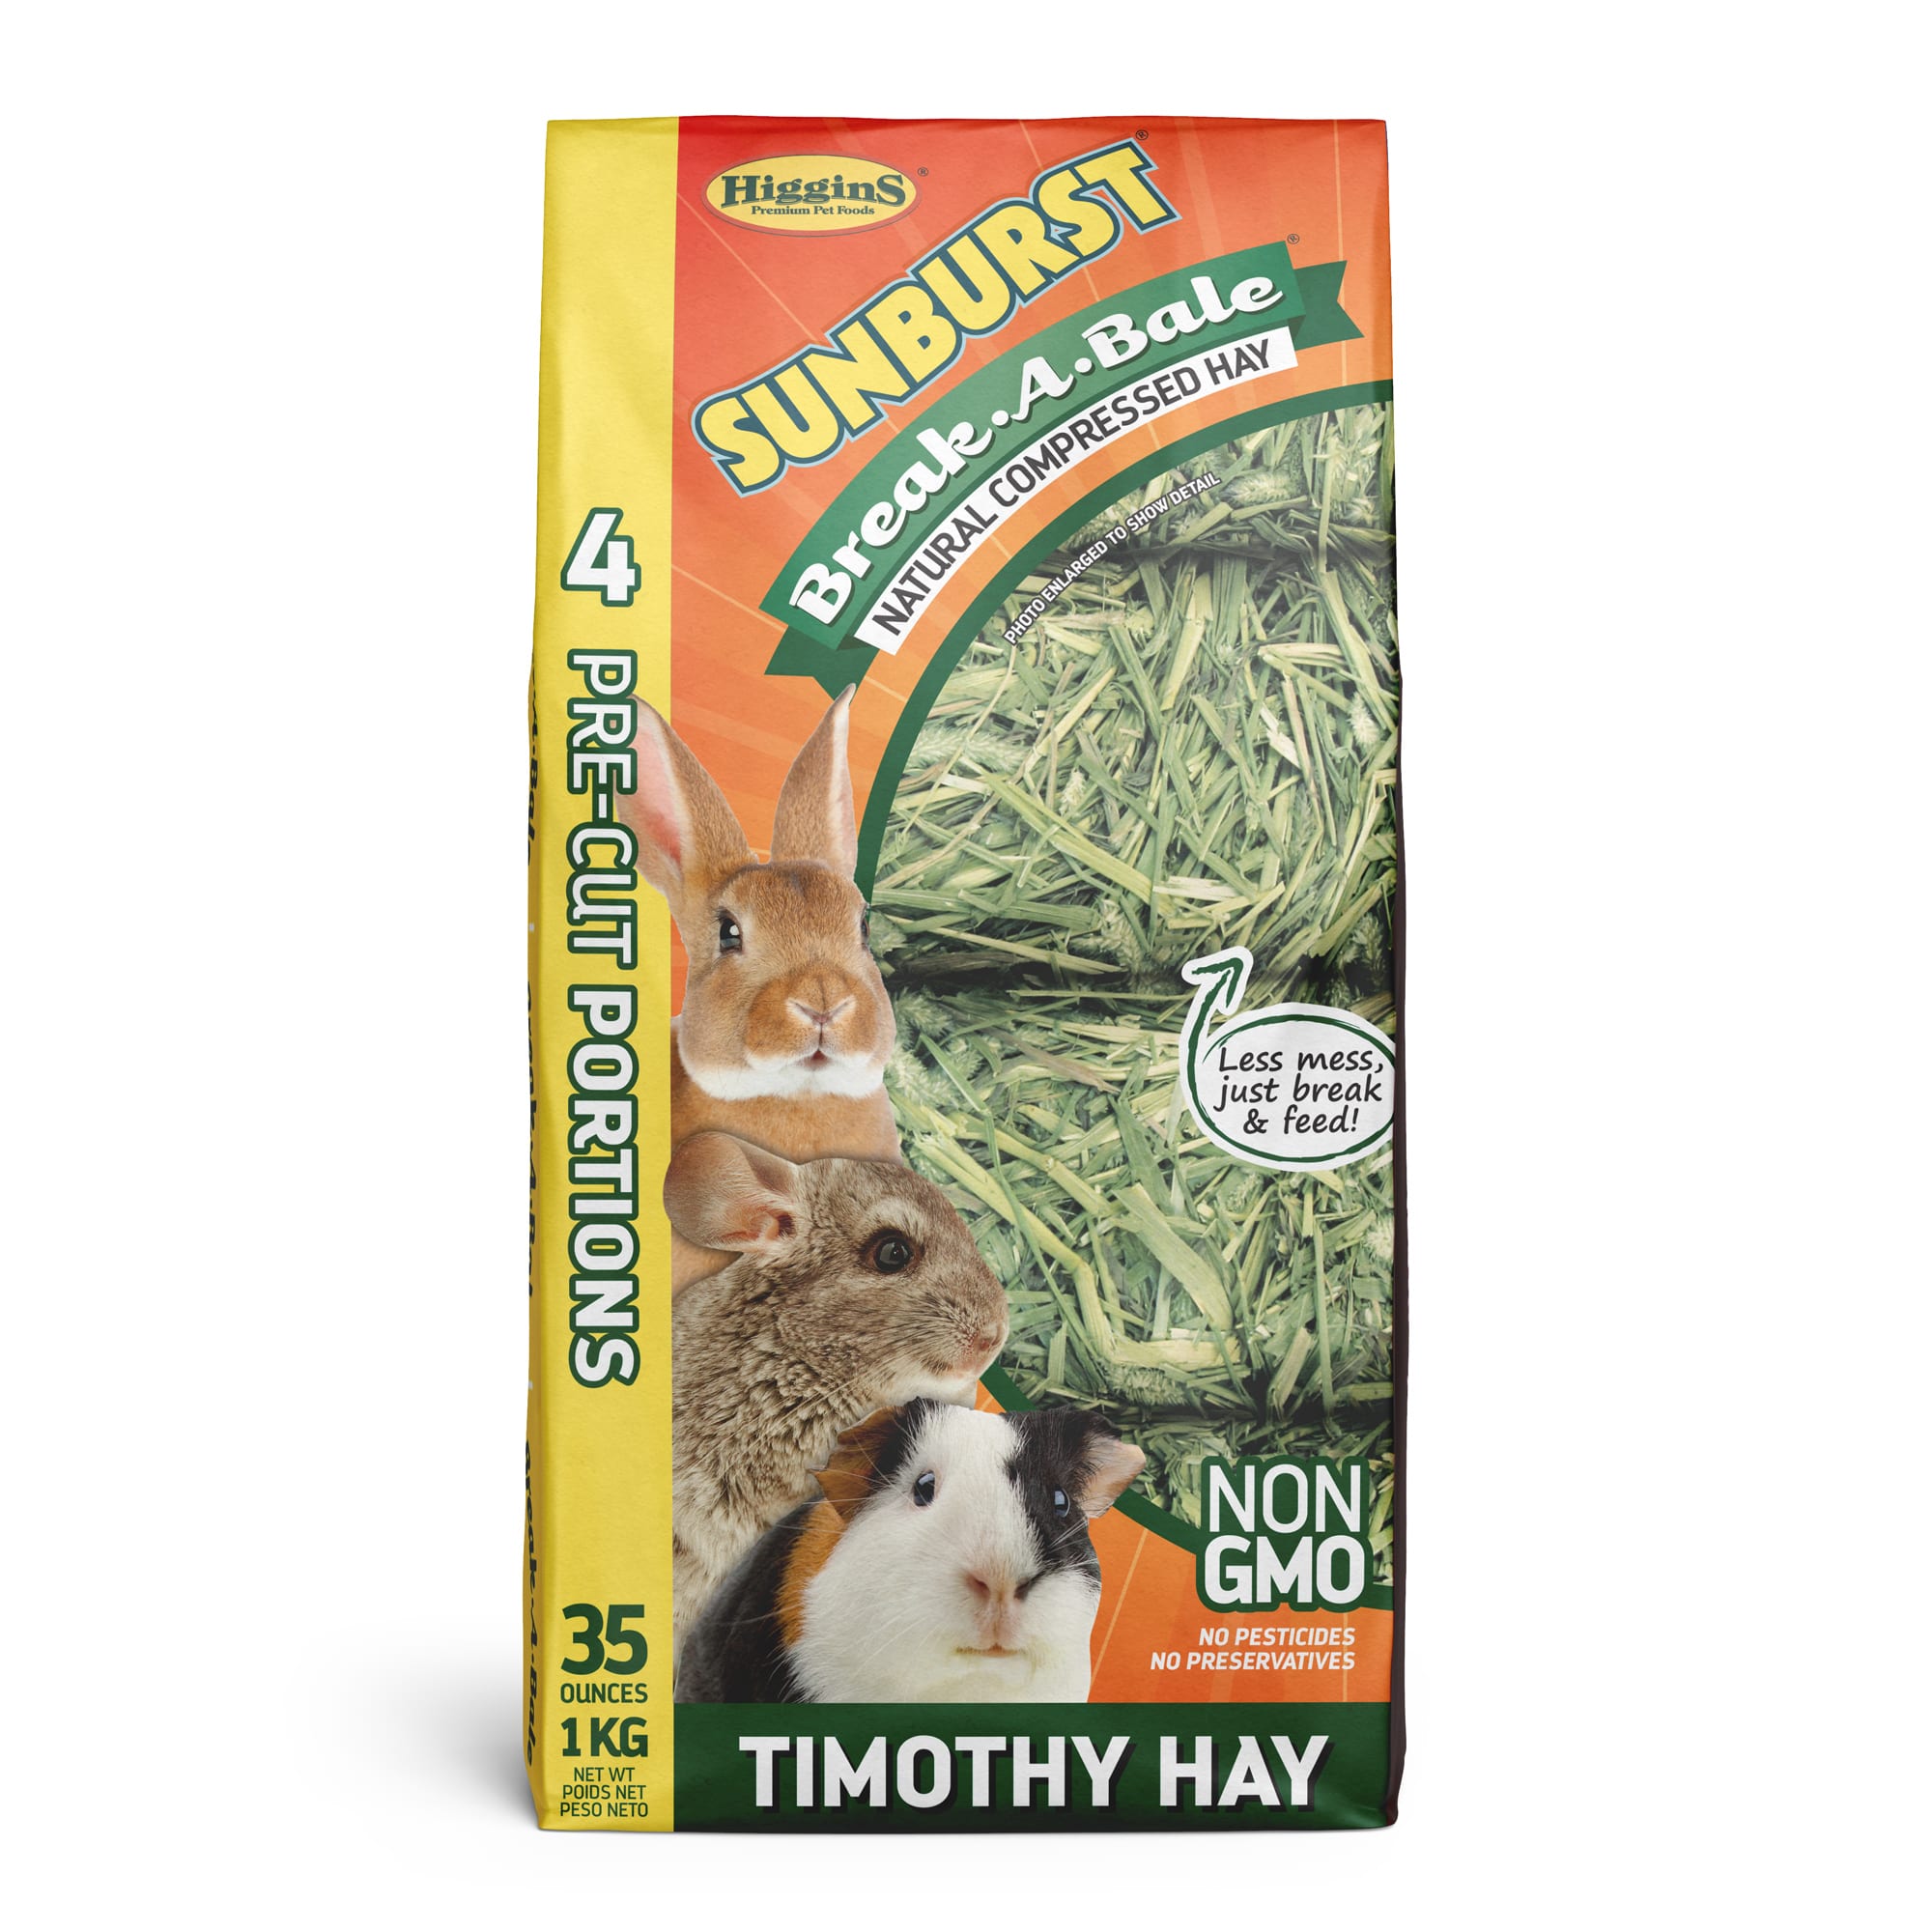 Hamster Care Sheet: Food, Habitat & Health